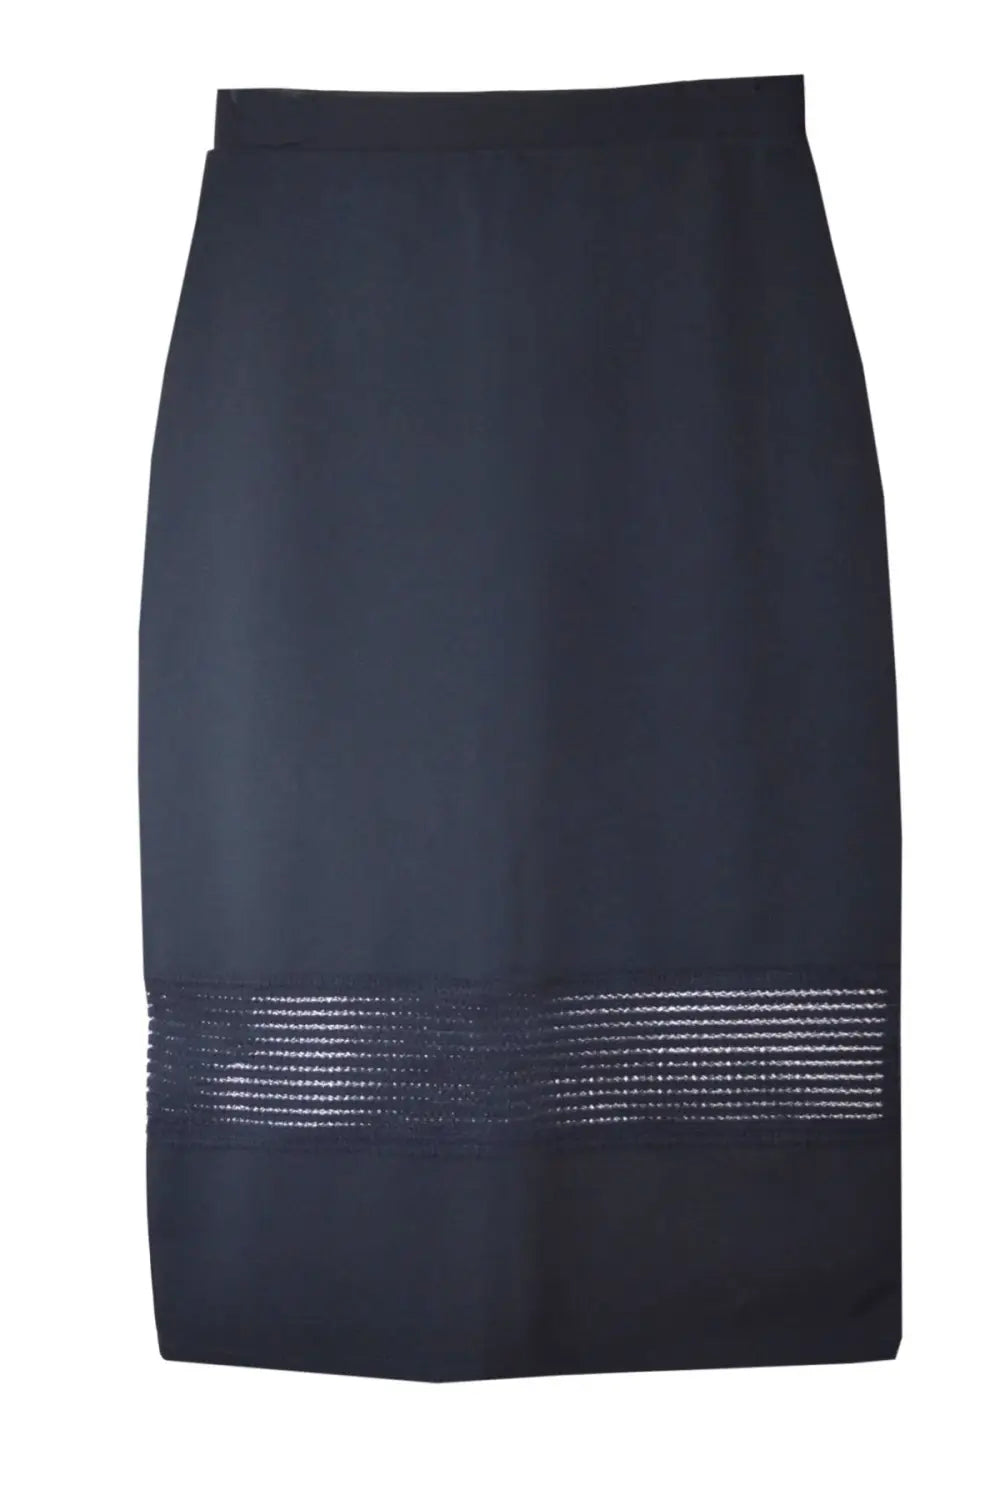 Miss Selfridge Lace Inset Bodycon Skirt